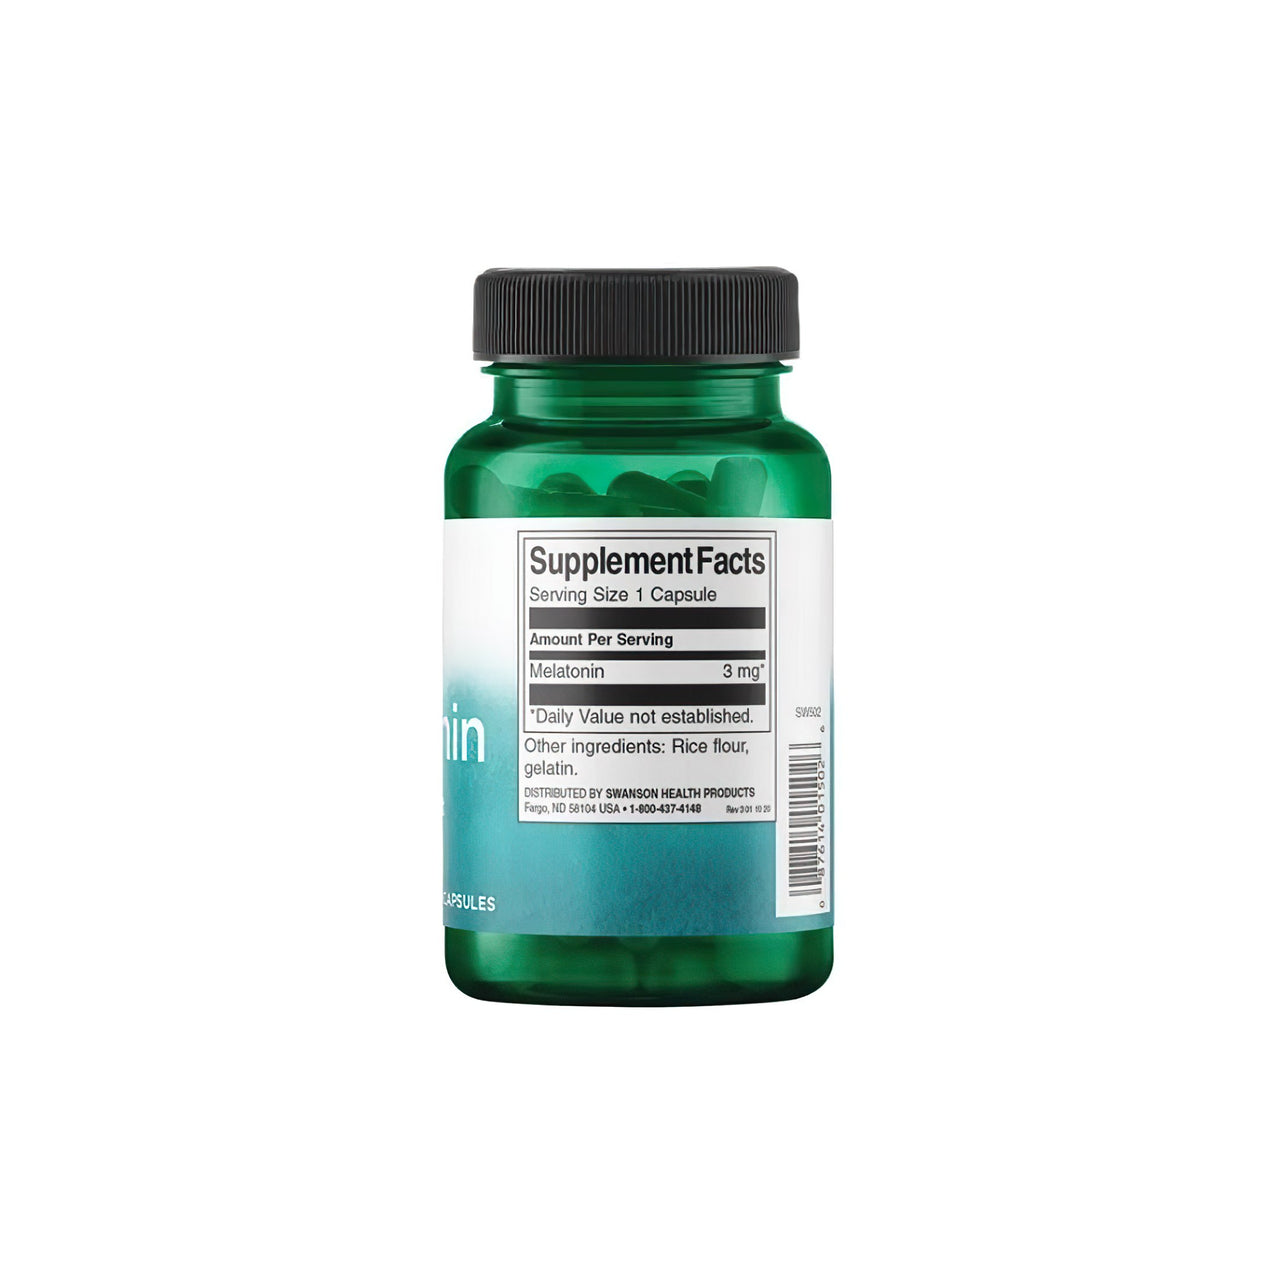 A bottle of Swanson Melatonin - 3 mg 120 capsules on a white background.